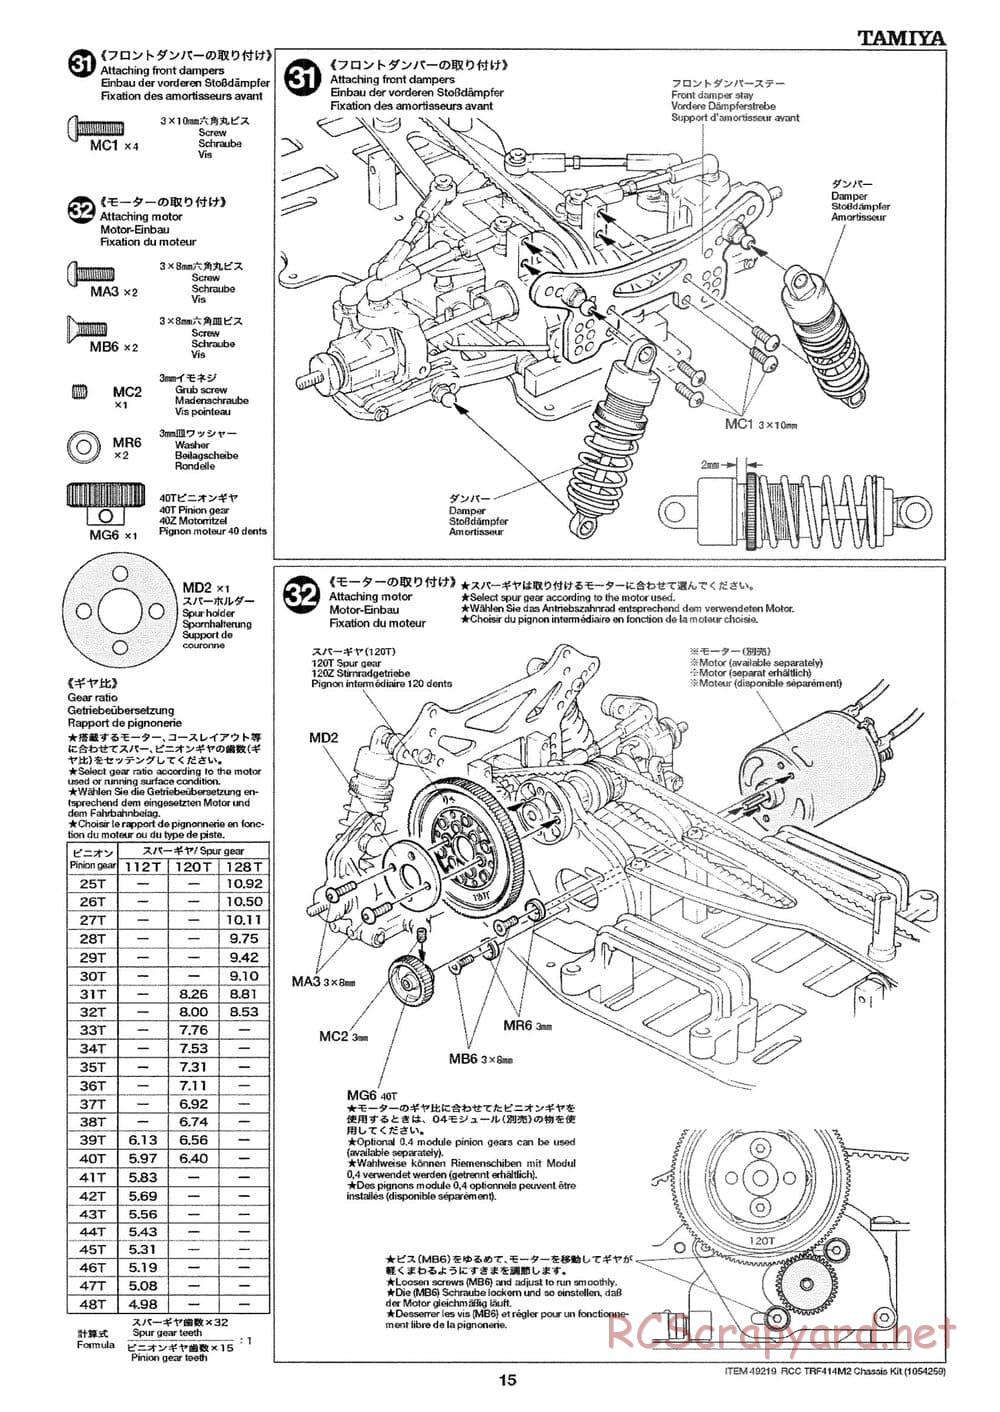 Tamiya - TRF414M II Chassis - Manual - Page 15